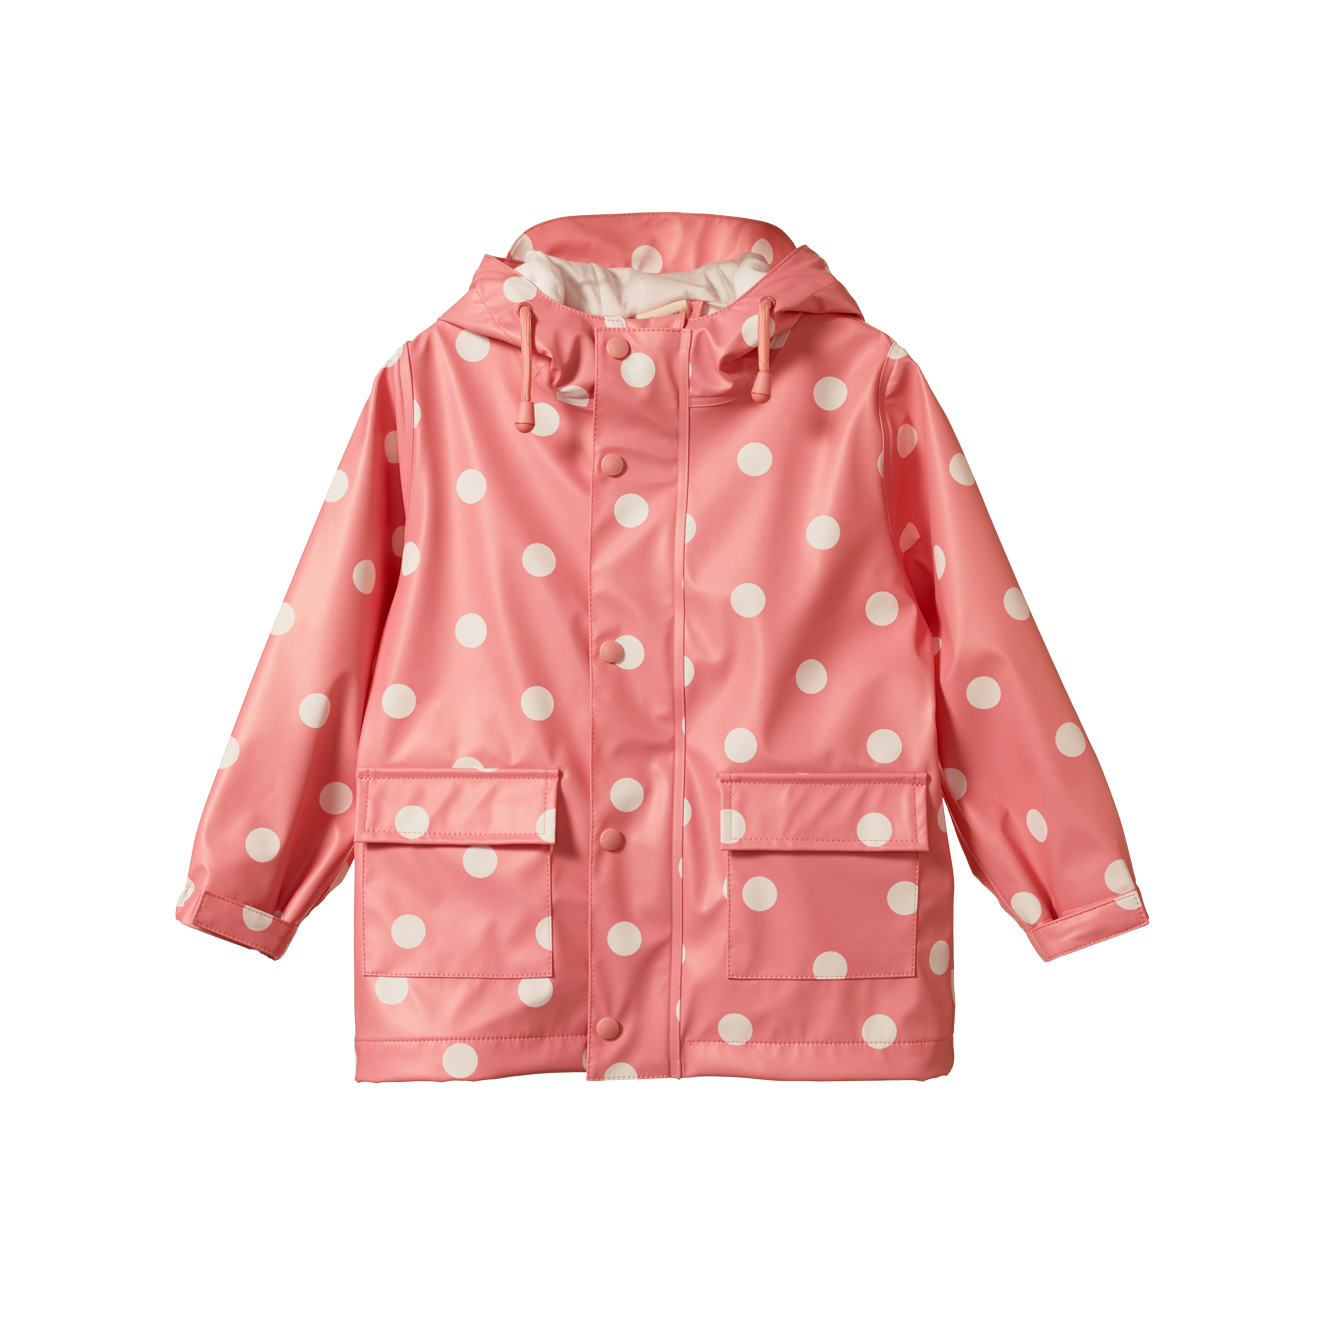 Nature Baby - Raincoat - Rose Polka Dot